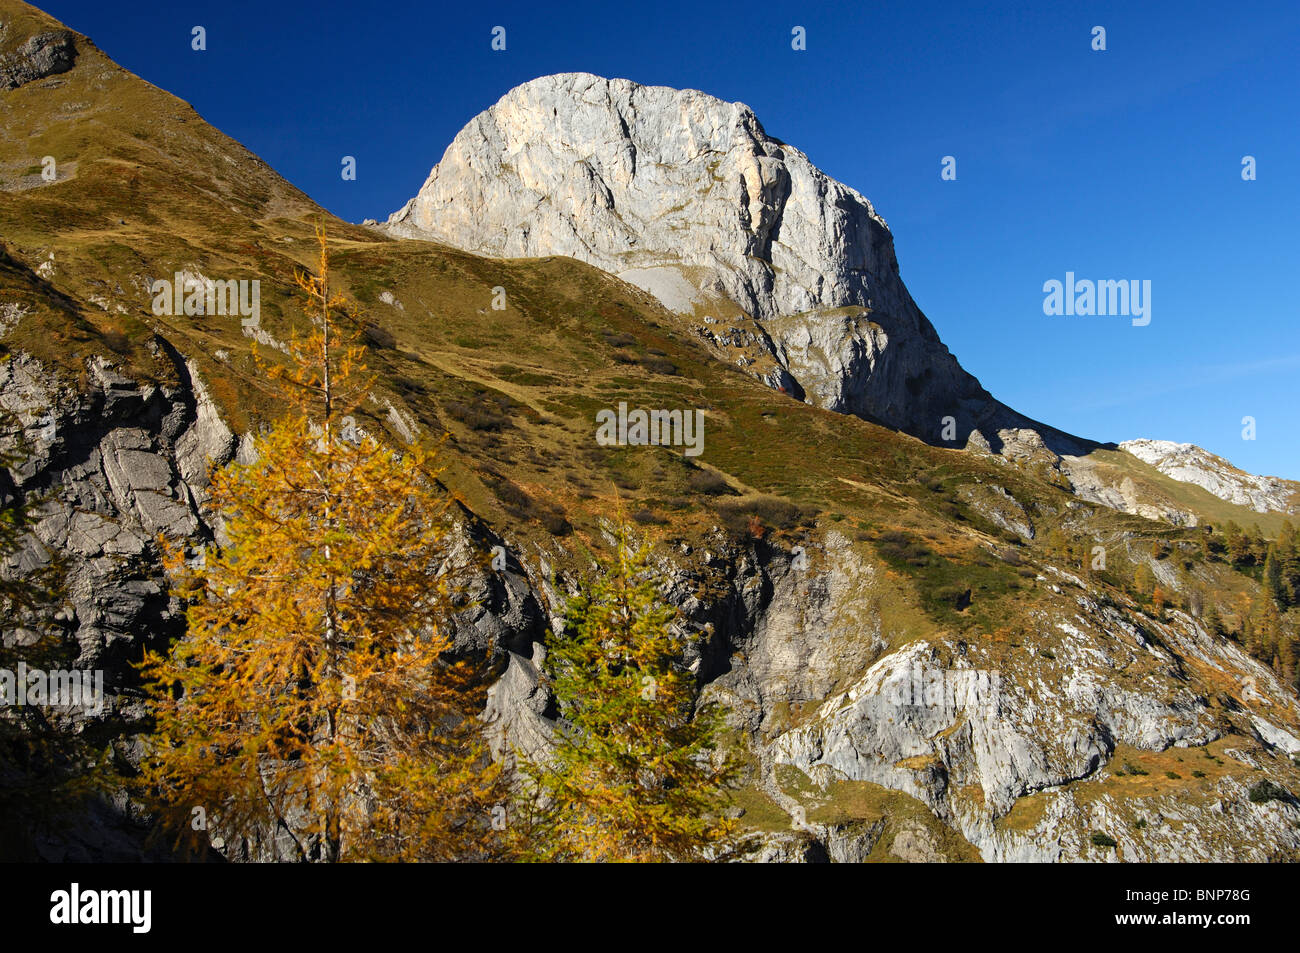 Il larice in autunno colori contro Mt. Spitzhorn nella valle Gelten, riserva naturale Gelten-Iffigen, Oberland bernese, Svizzera Foto Stock